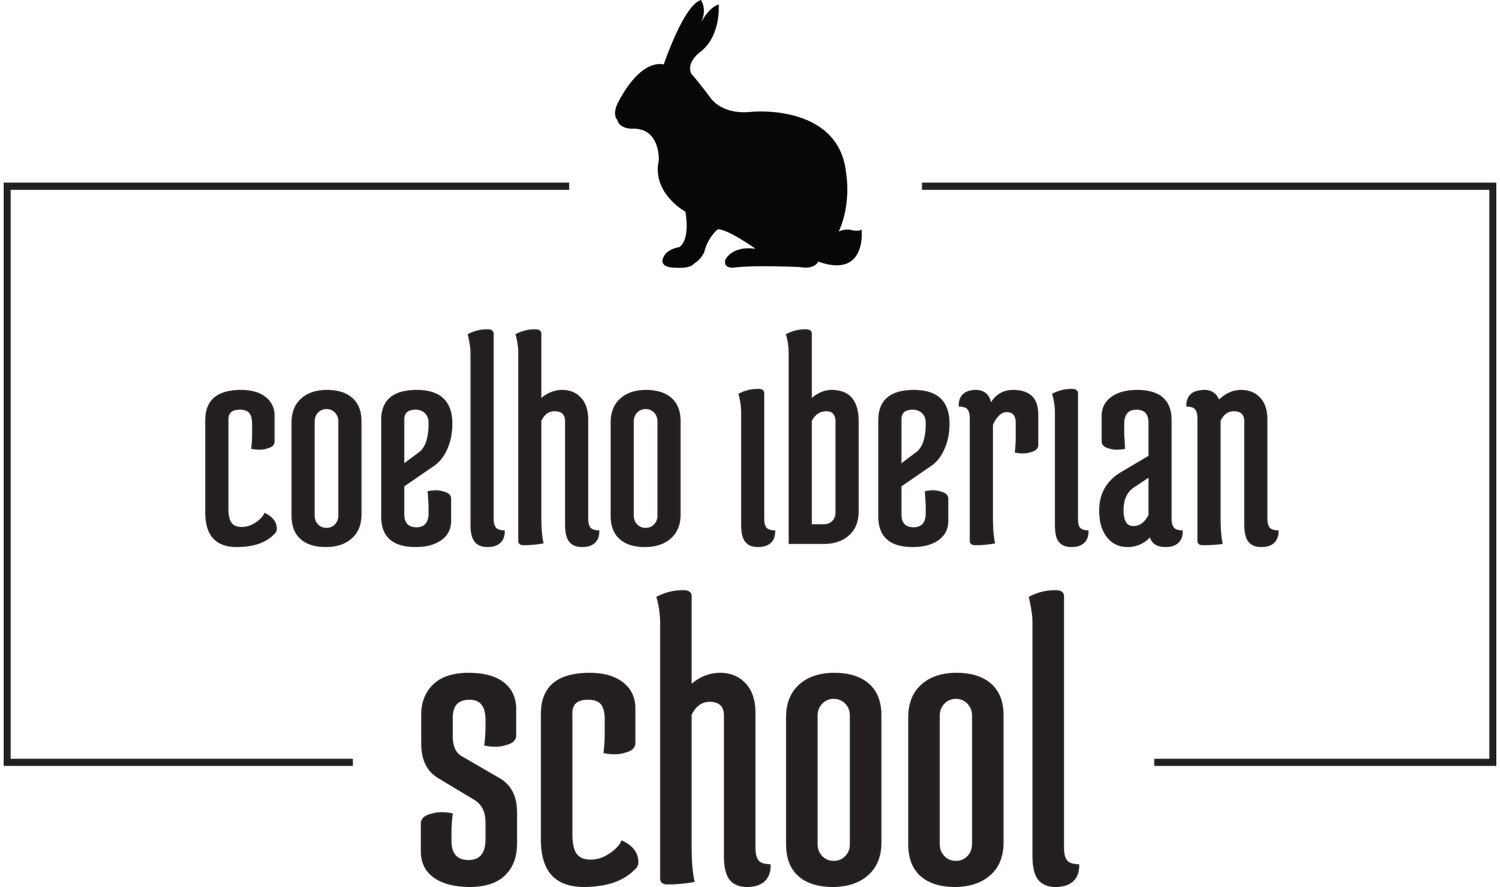 Coelho Iberian School